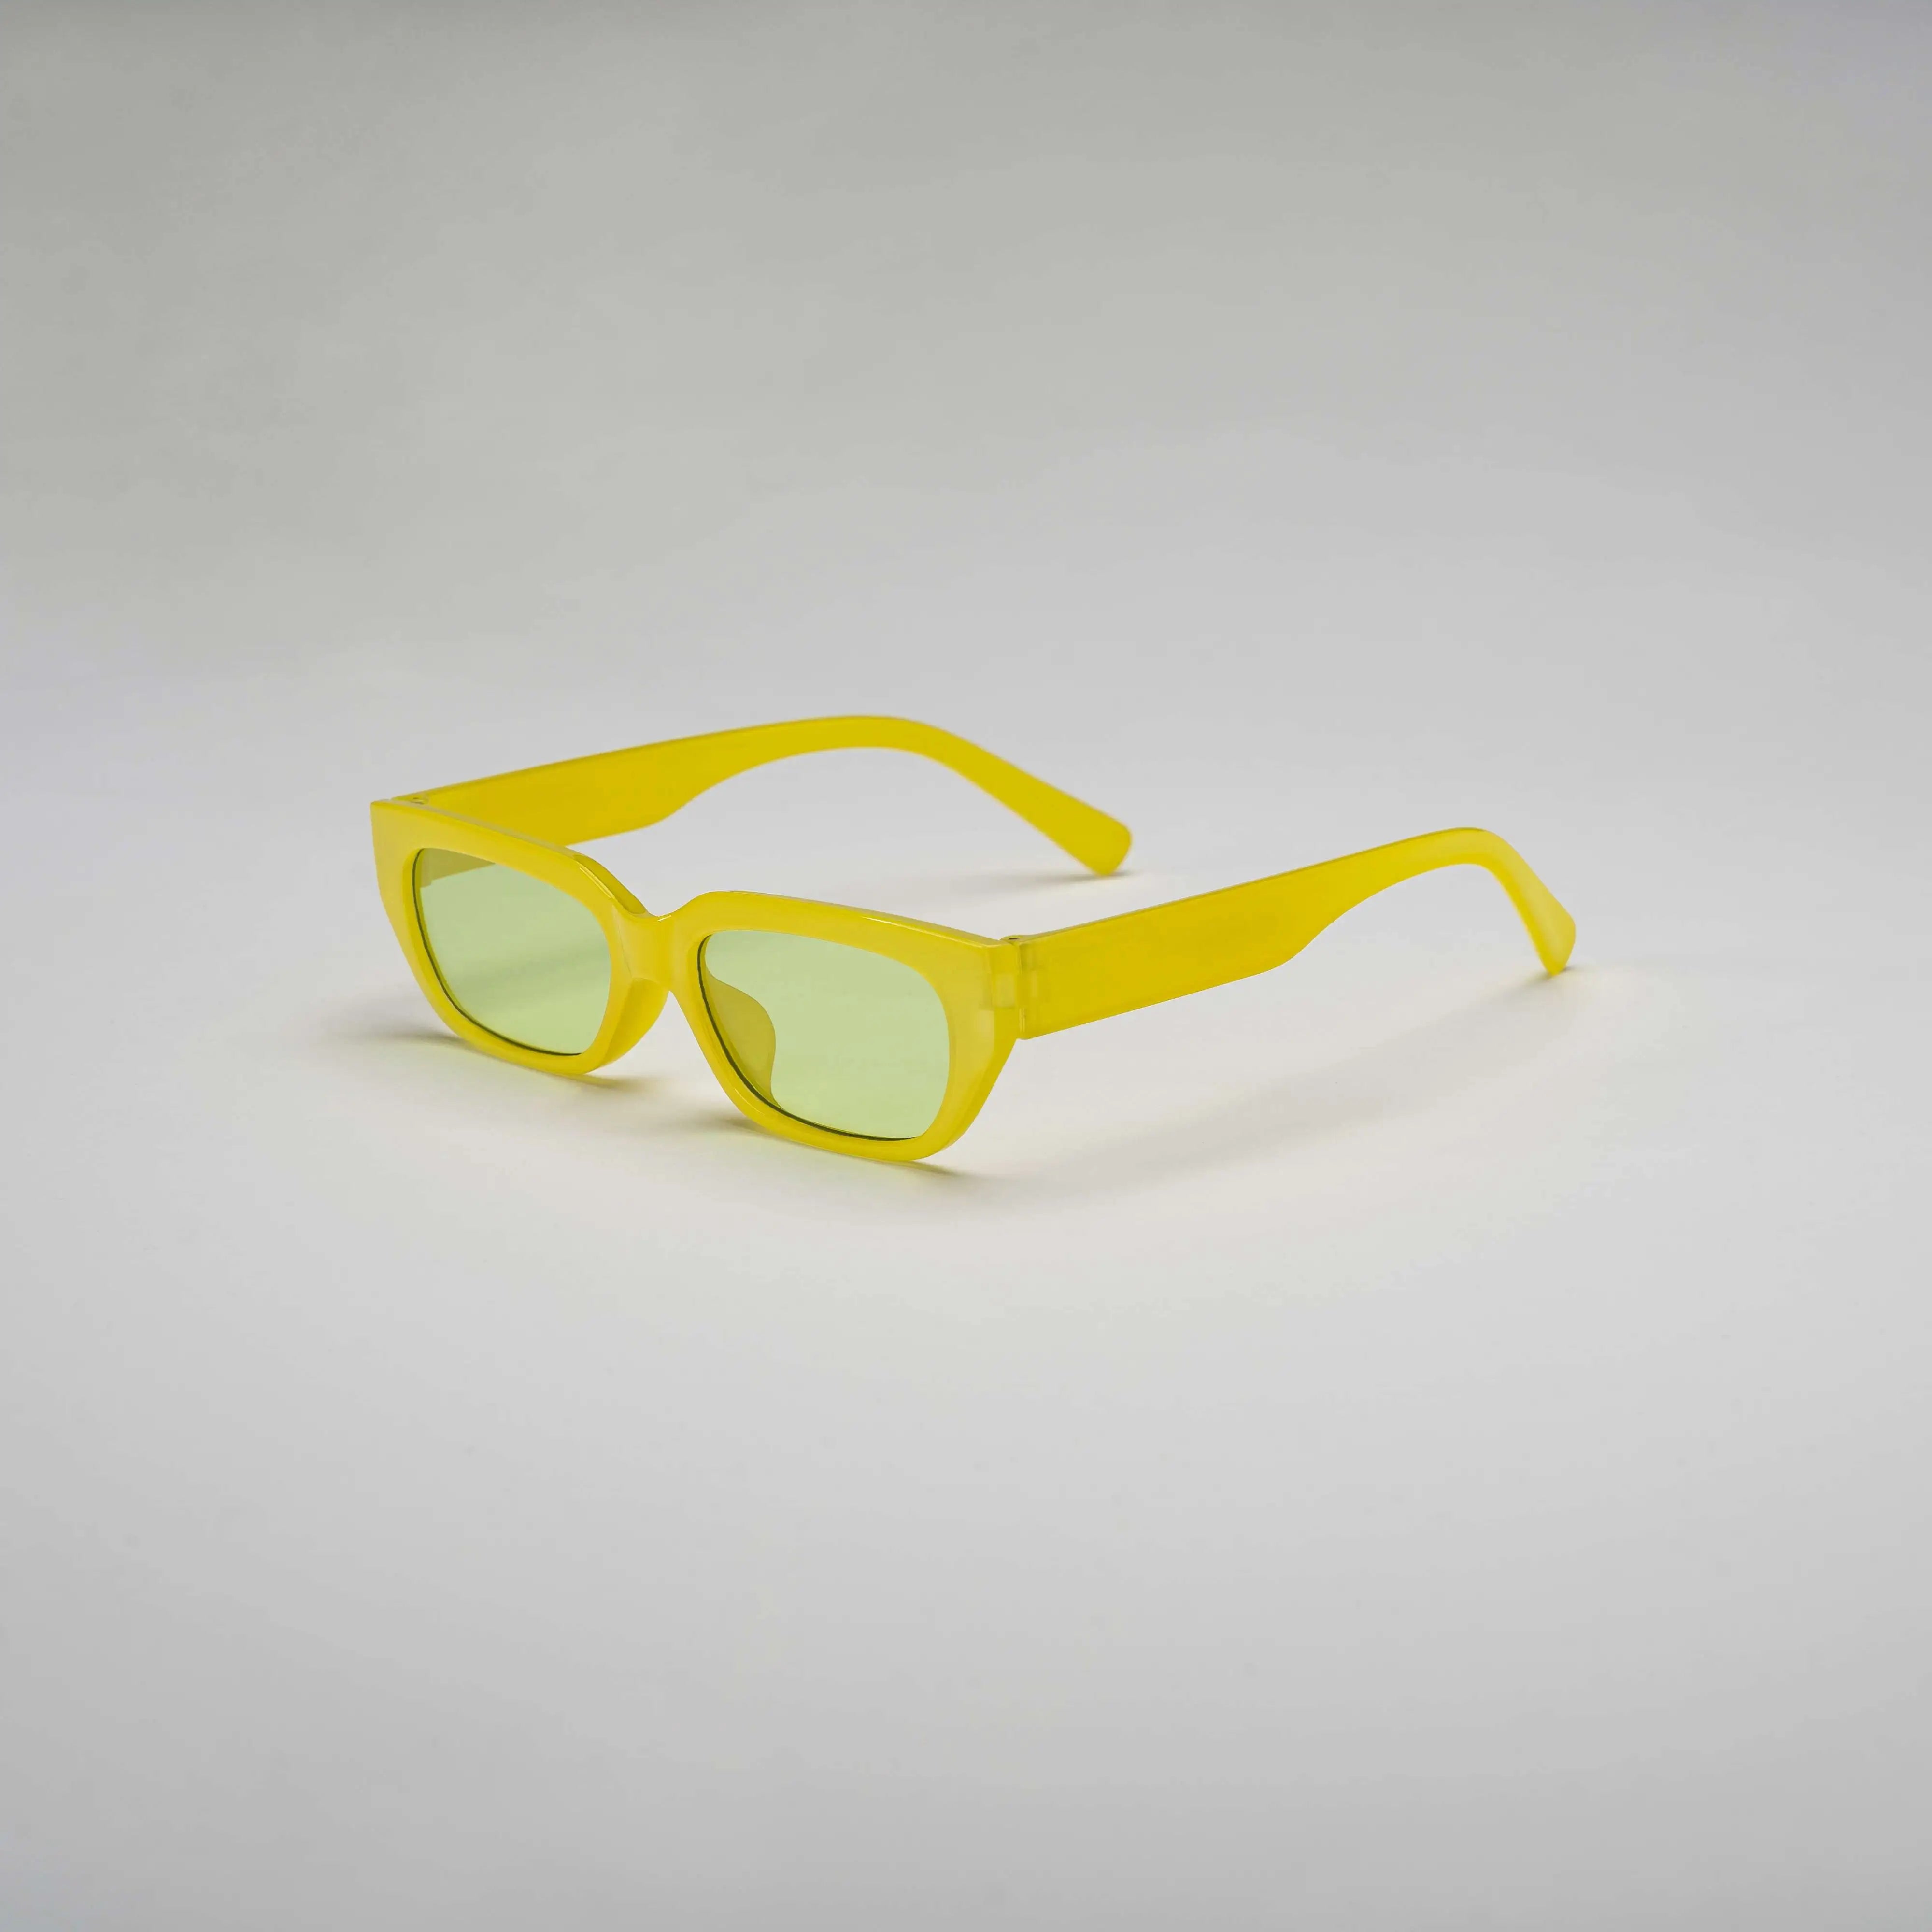 'House Arrest' Retro Sunglasses in Yellow & Green